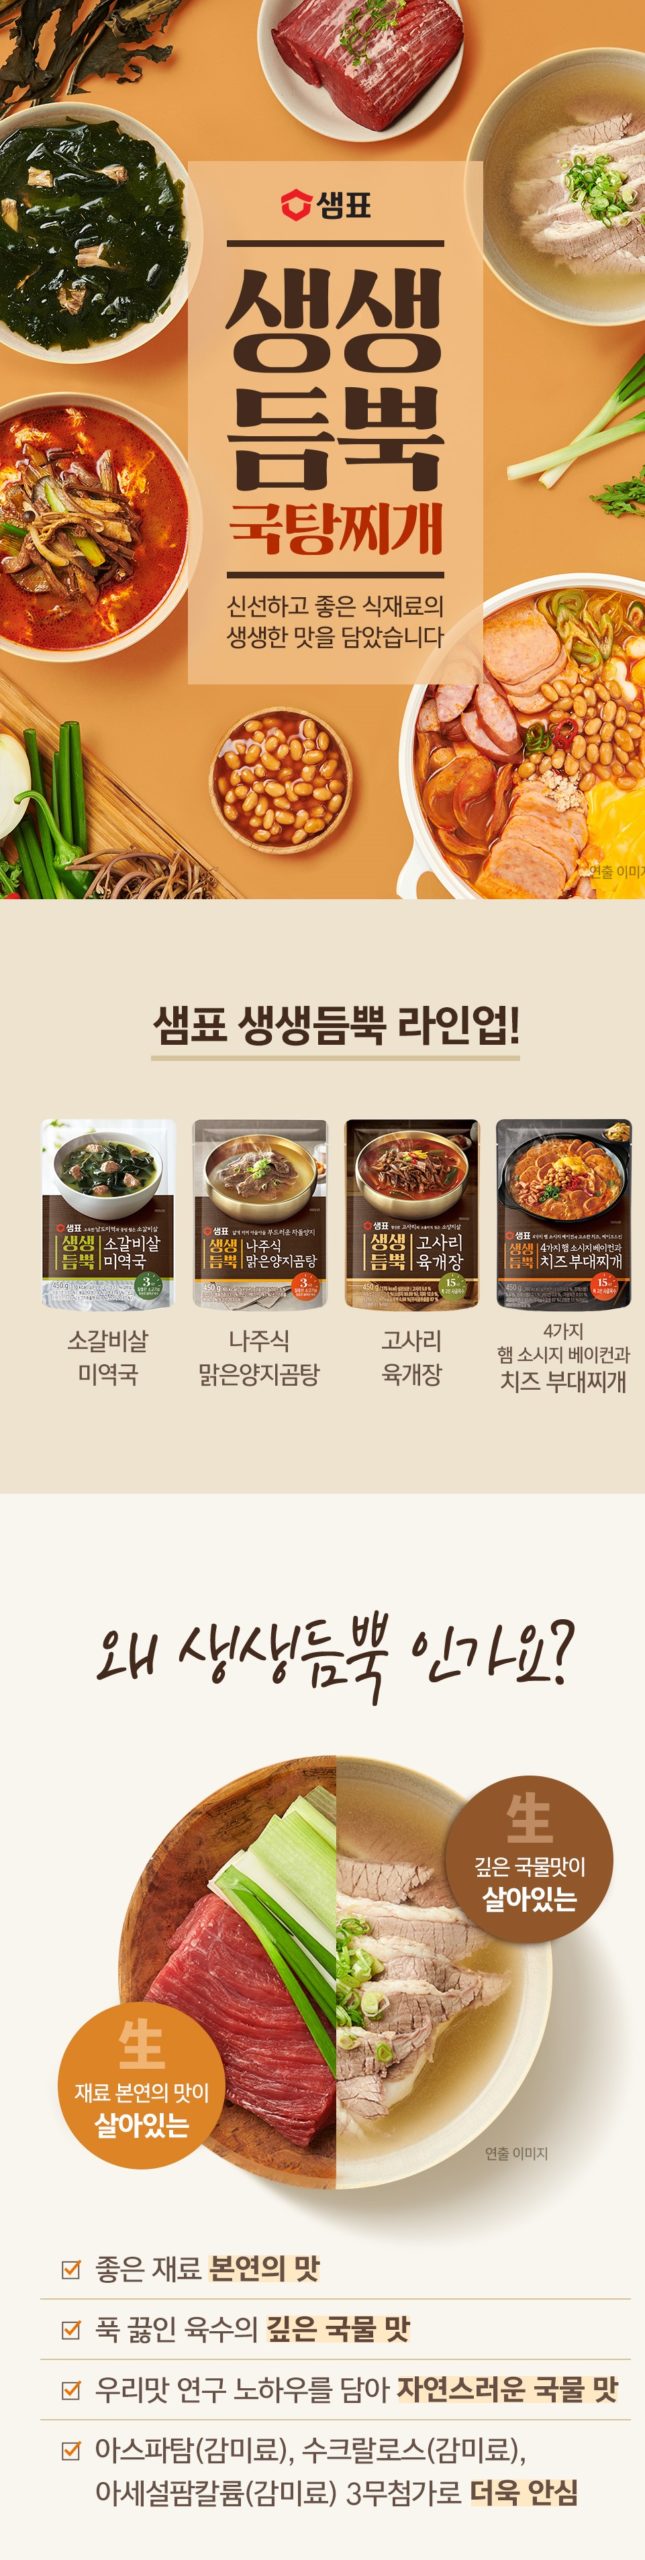 韓國食品-[Sempio] Naju-Style Yangji Gomtang 450g